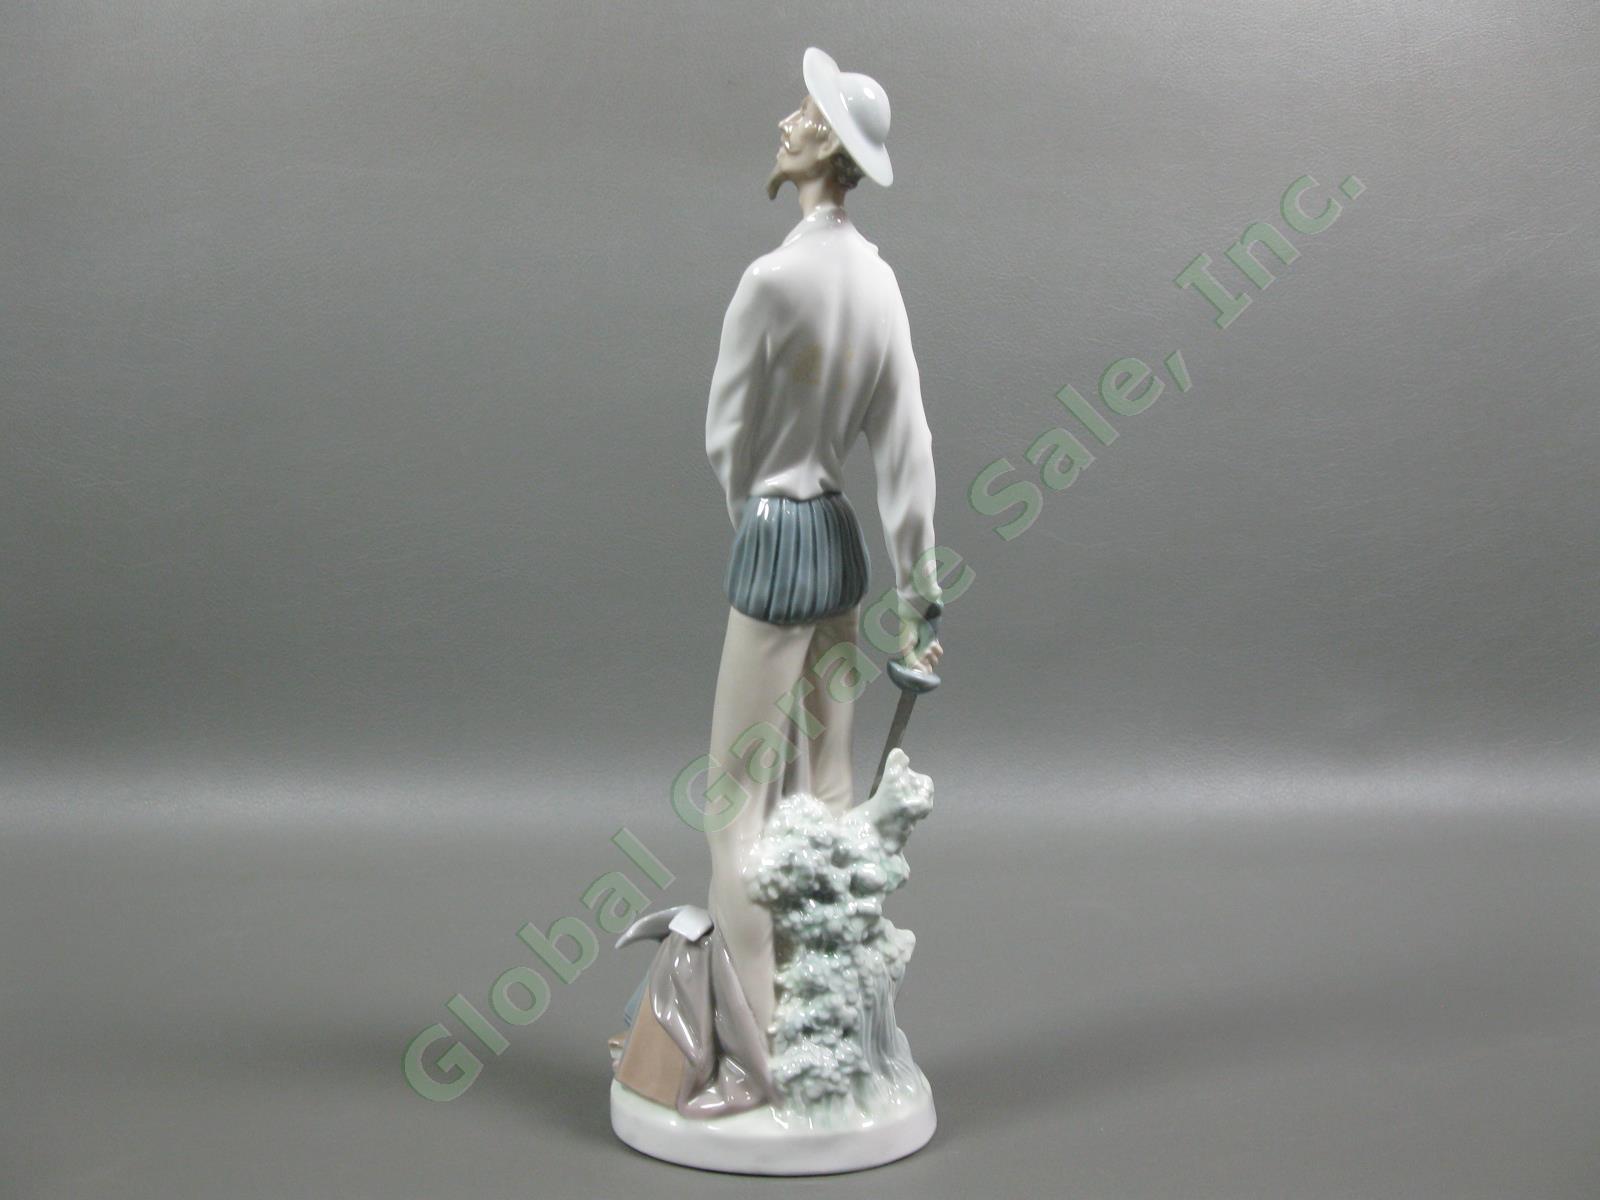 1985 Lladro 4854 Don Quixote Standing Sword Collectors Society Plaque Figurine 4